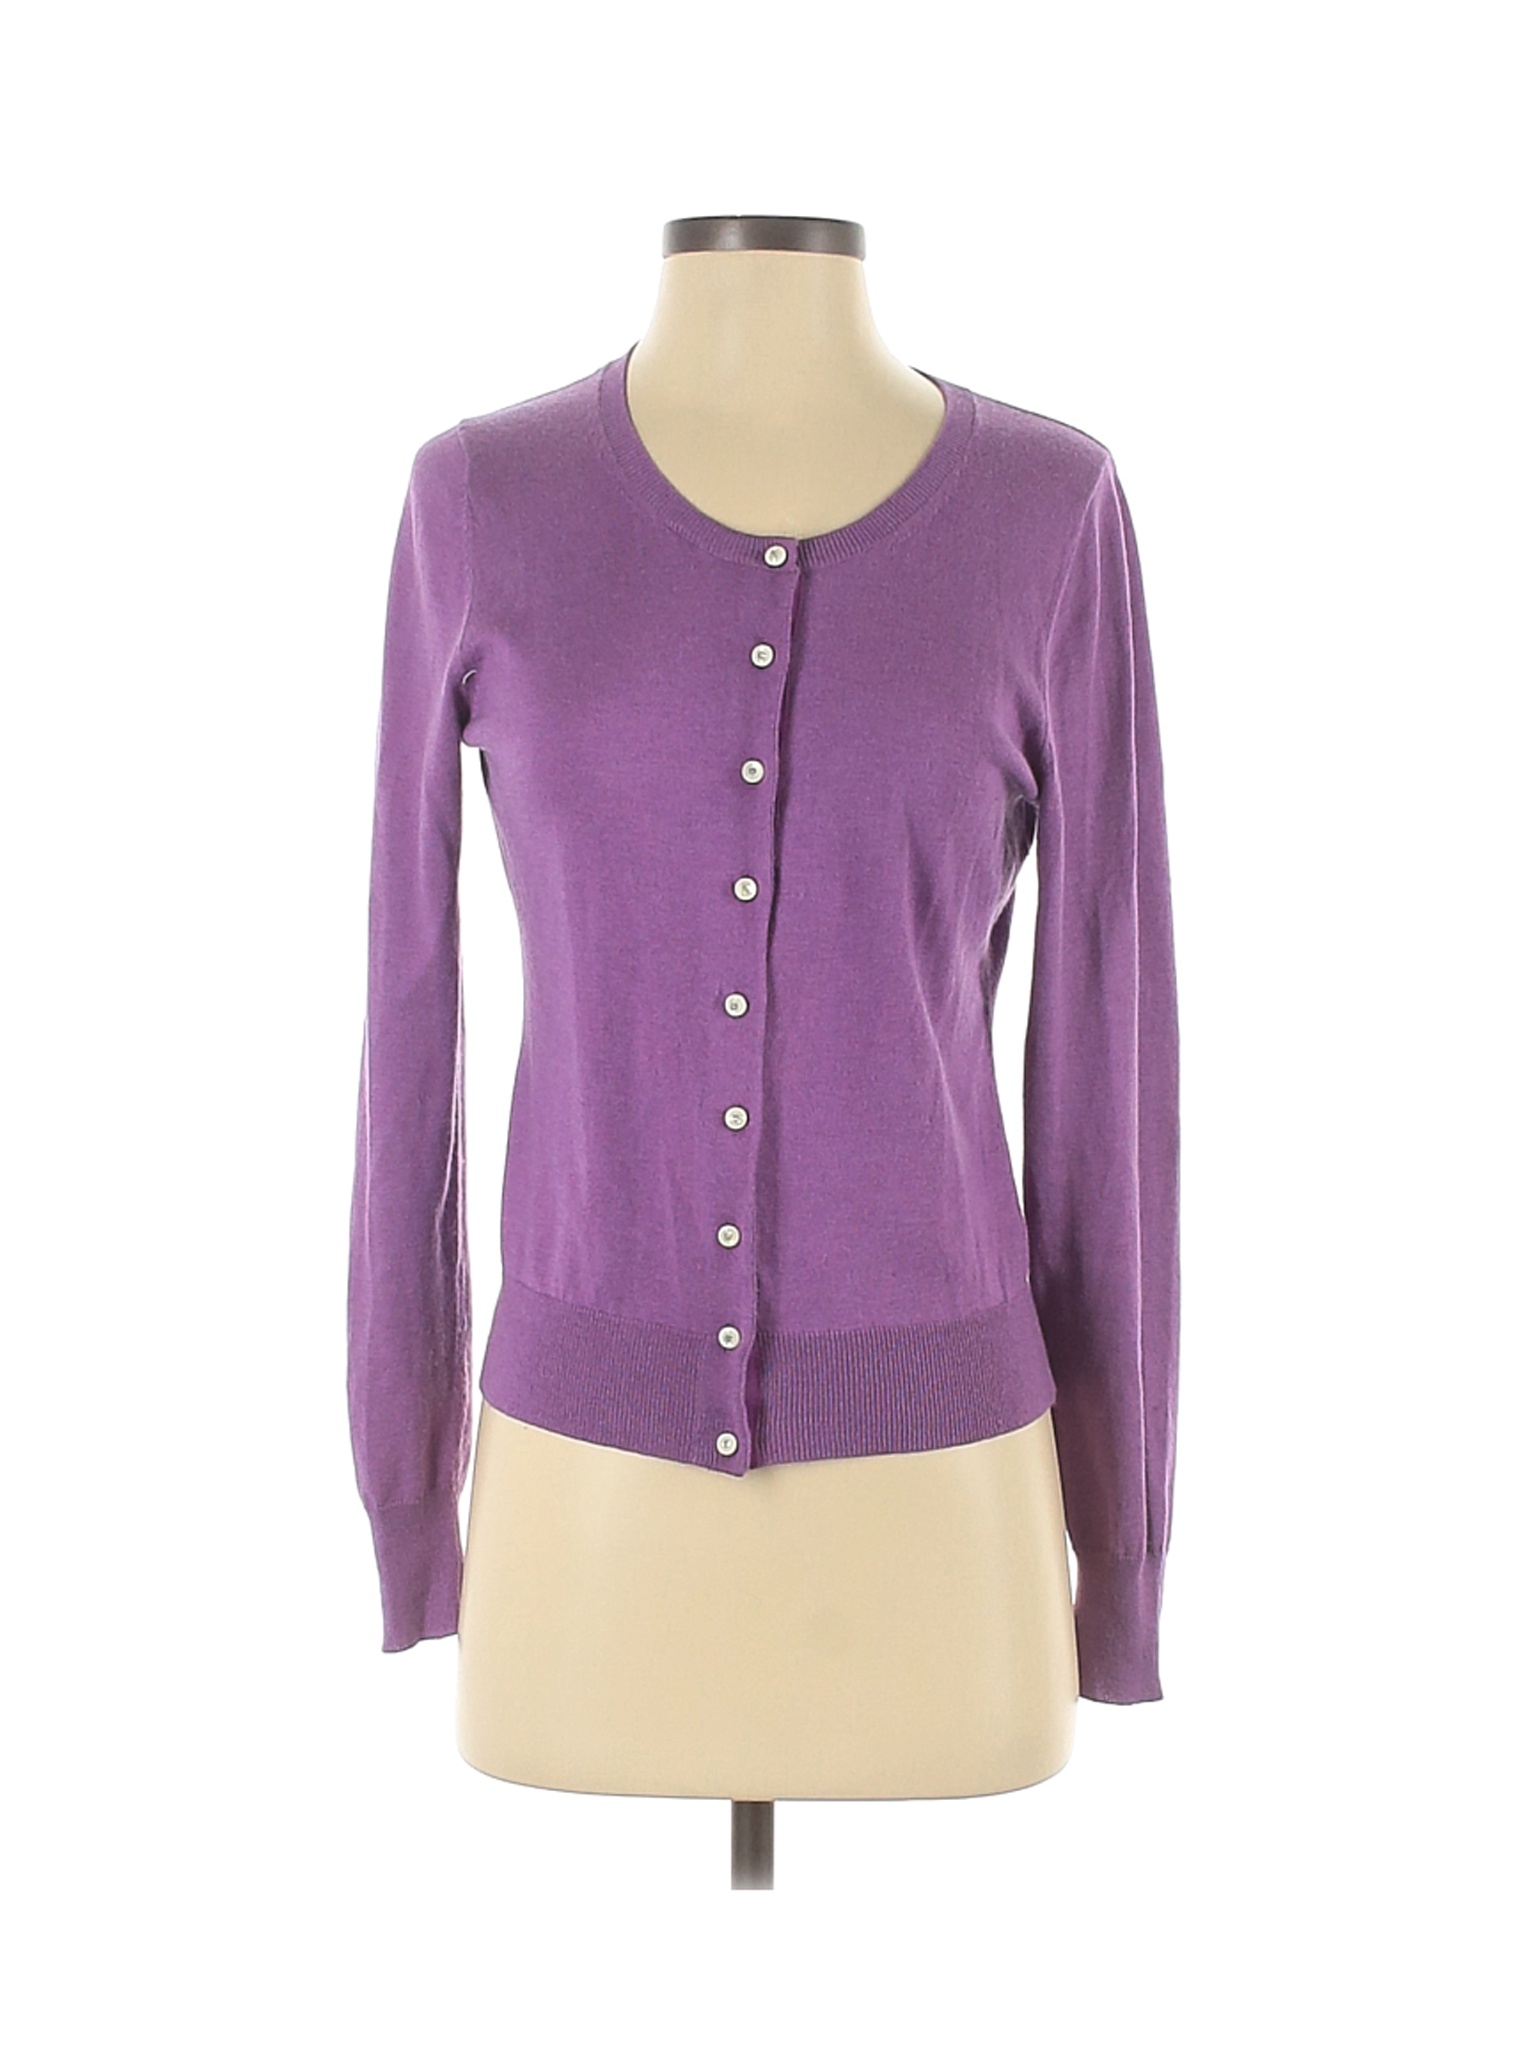 Banana Republic Women Purple Silk Cardigan S | eBay